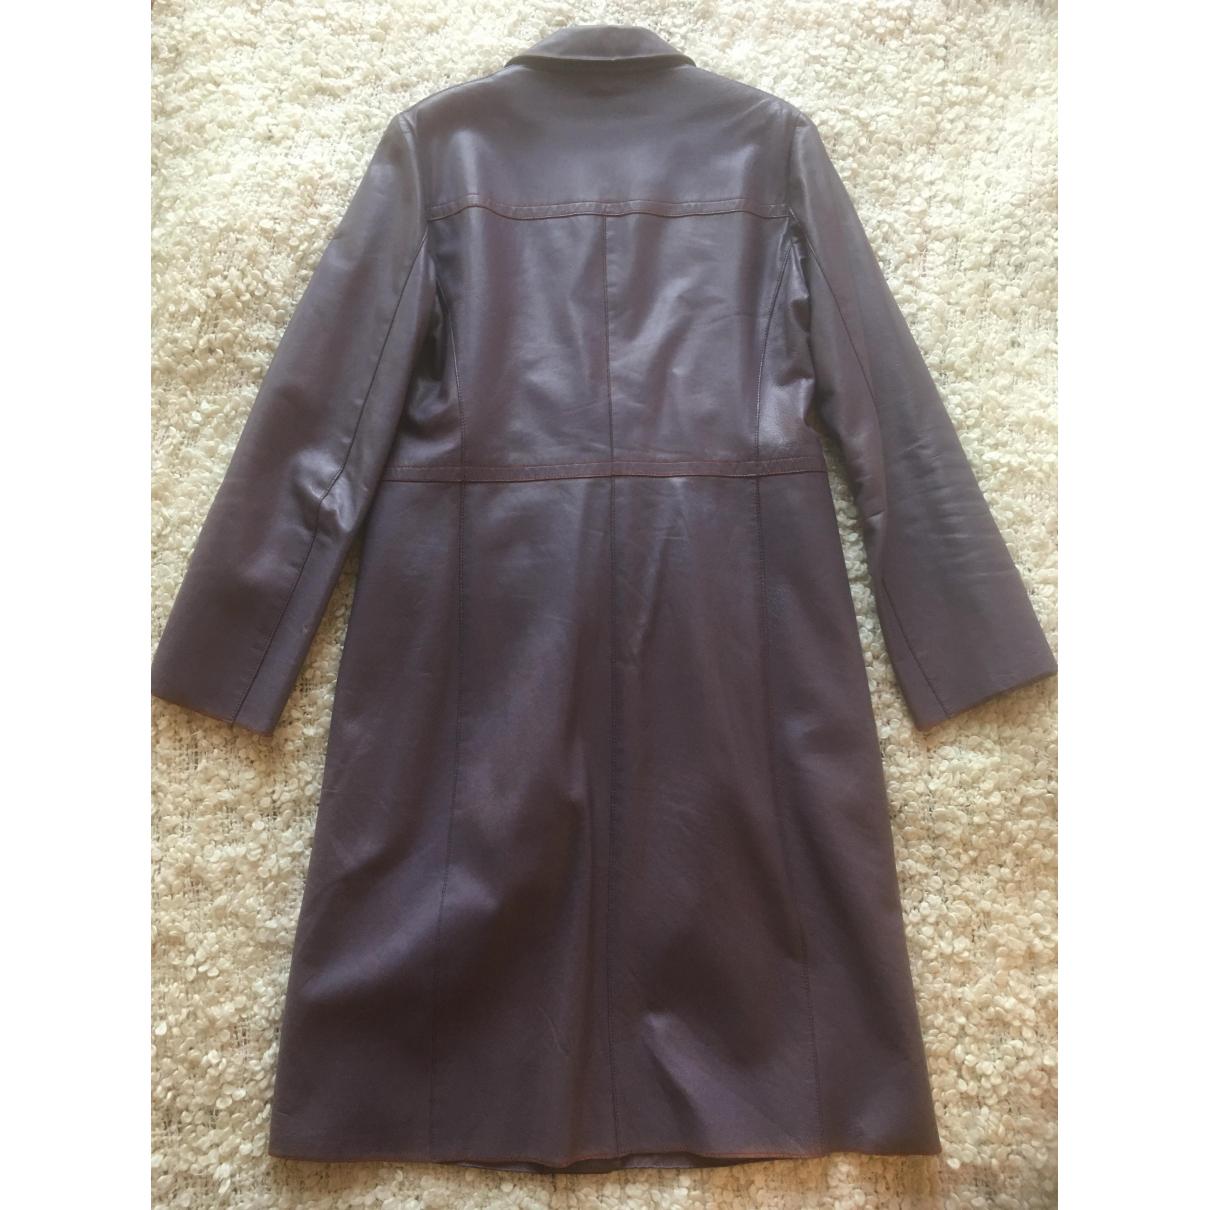 Buy Cerruti Leather coat online